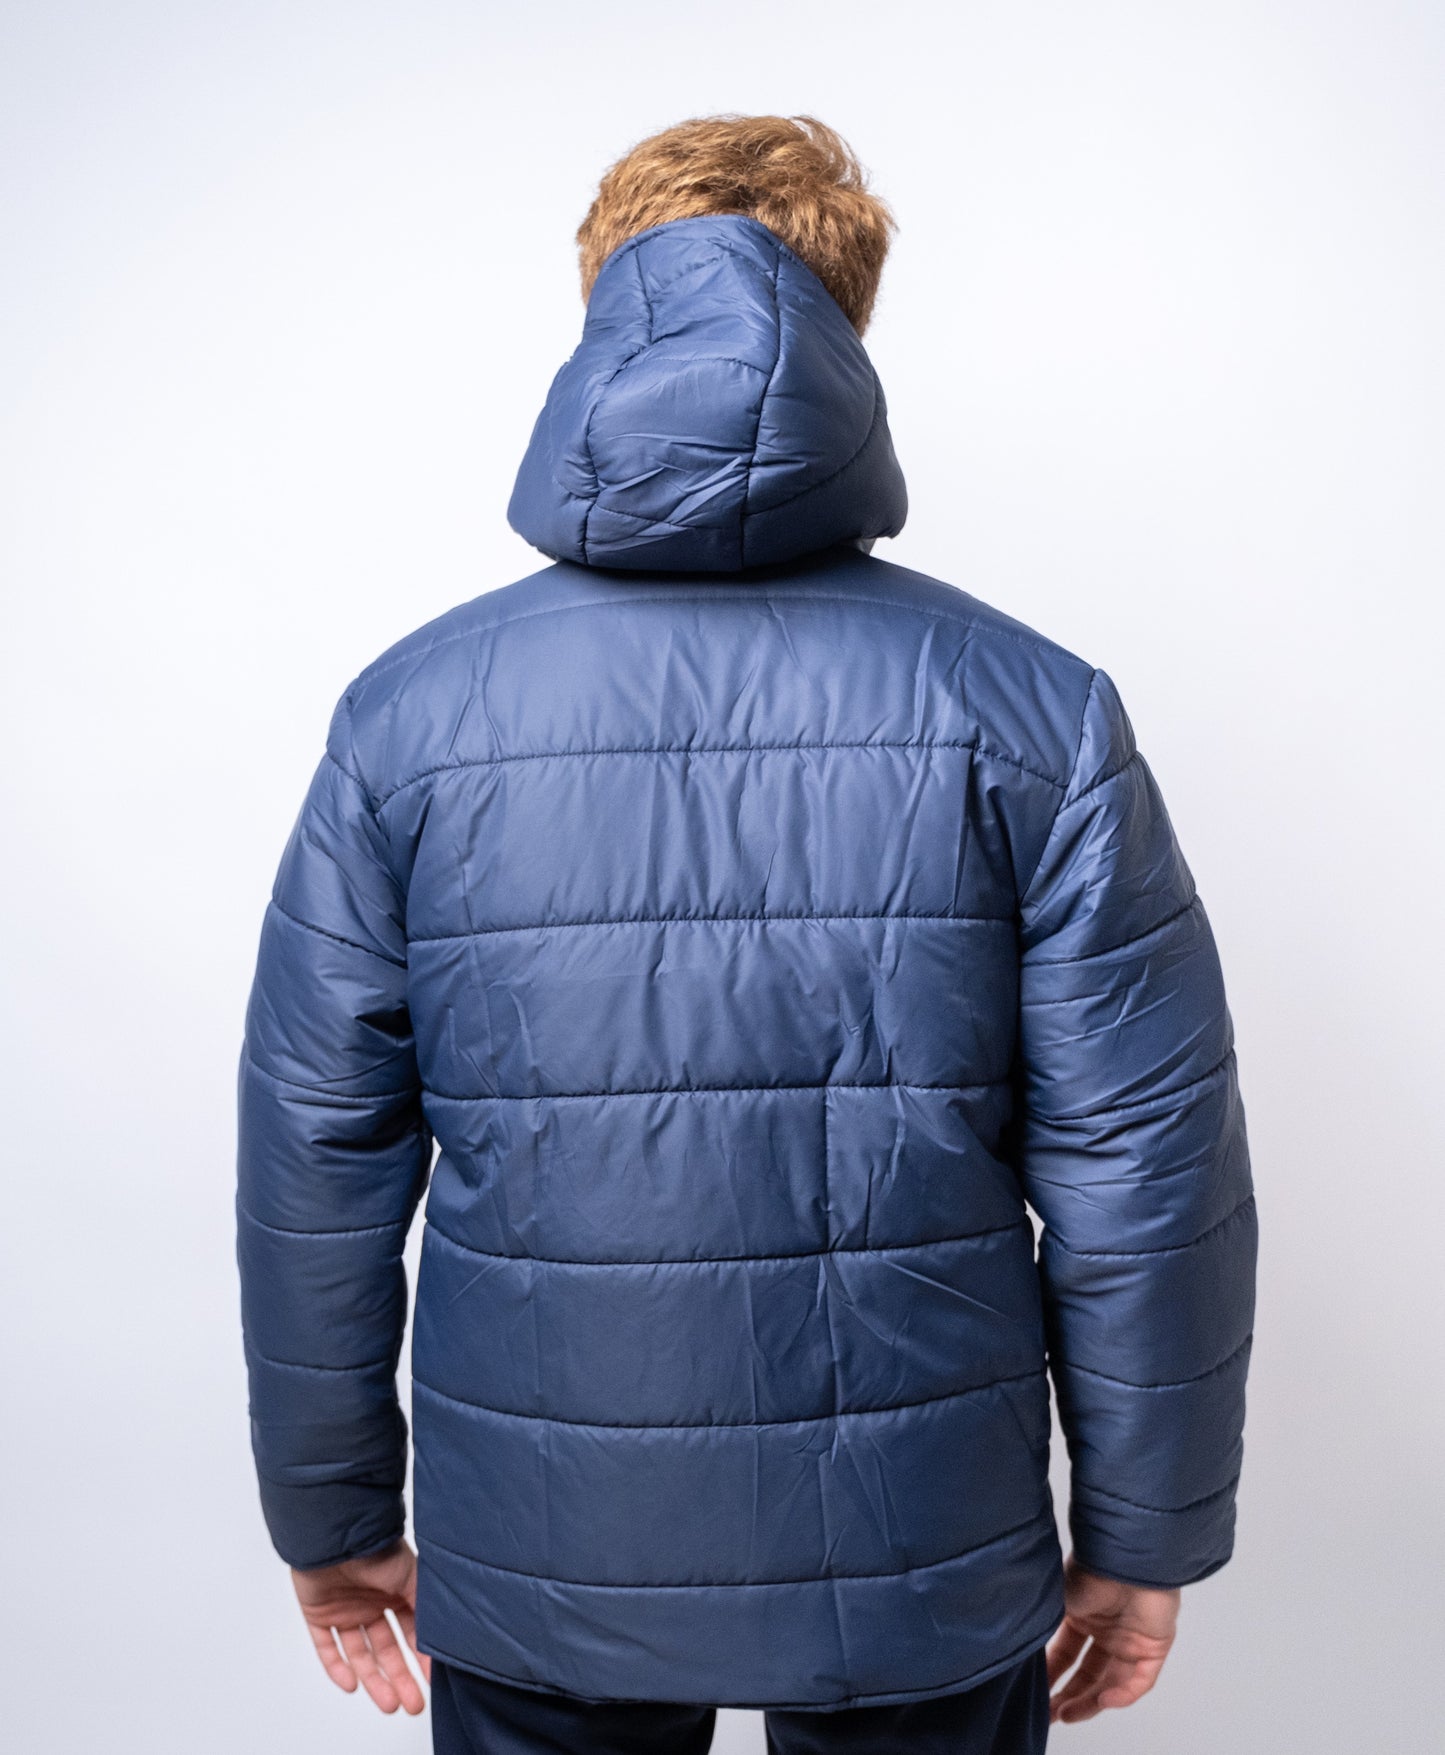 Authentic Unisex Winter Jacket